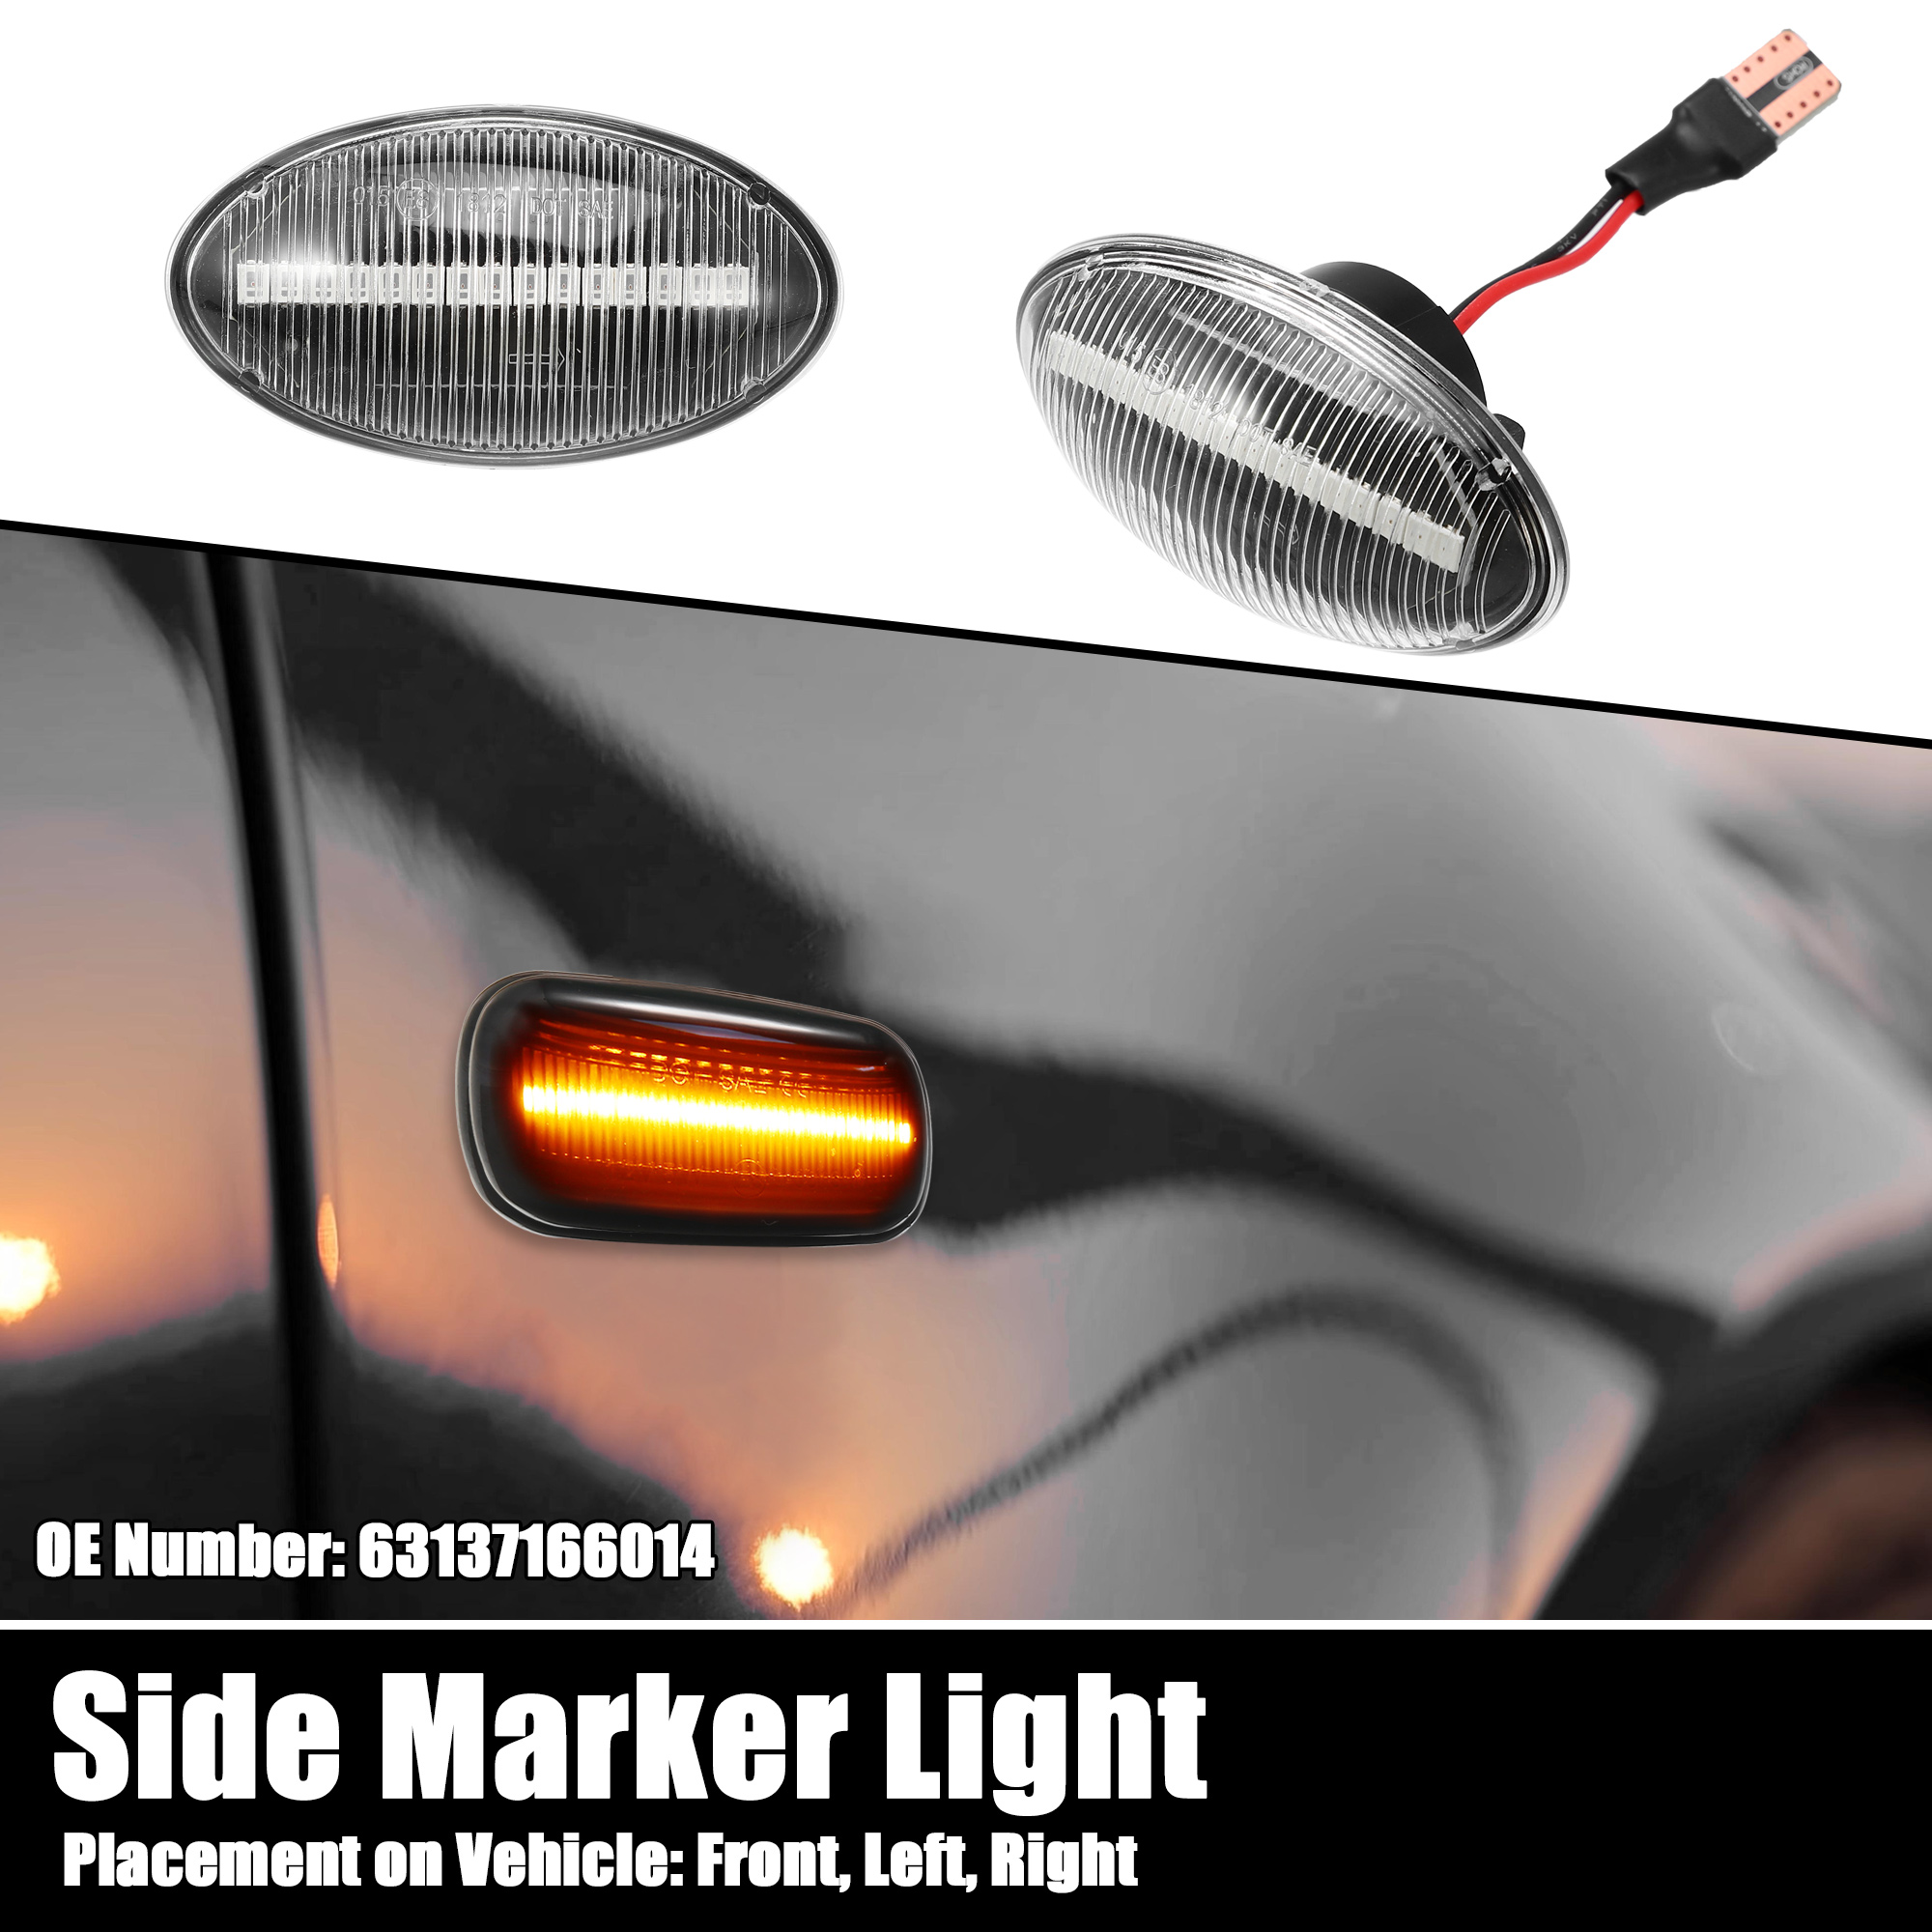 Unique Bargains 1 Pair Car LED Side Marker Lights 63137166014 Fit for MINI Cooper R50 R52 R53